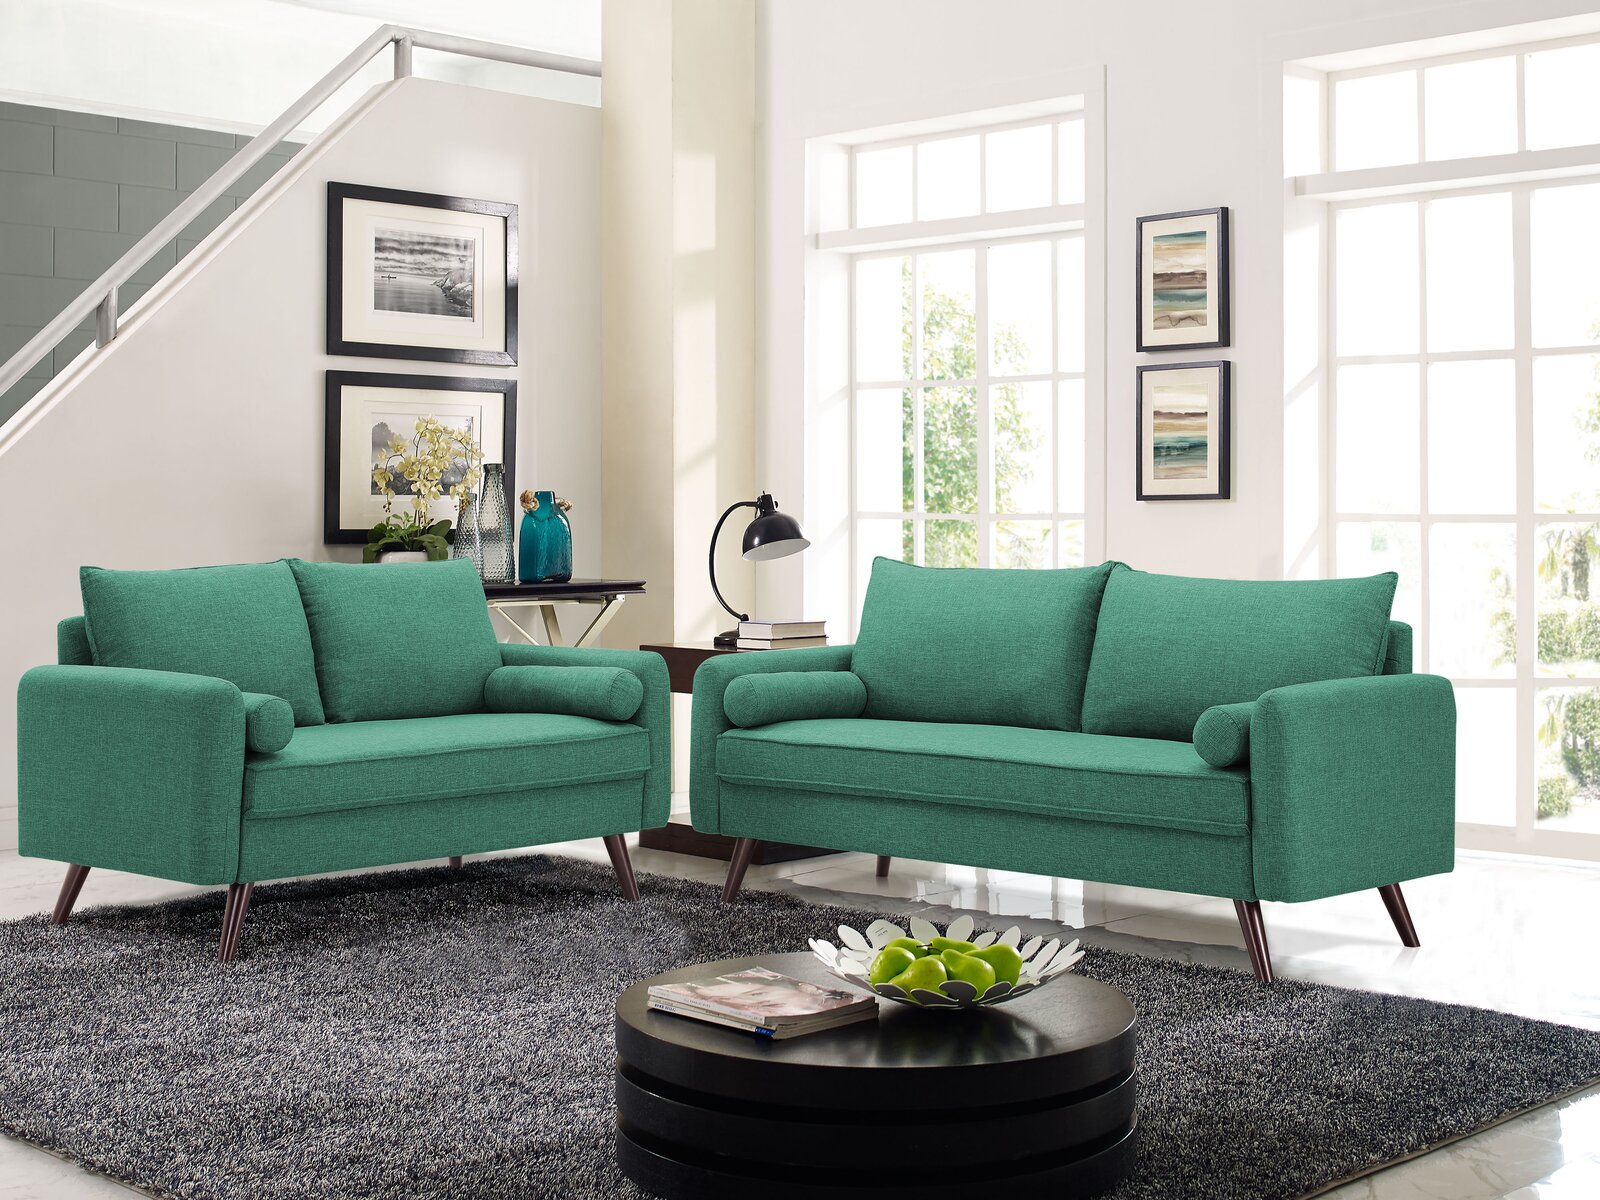 Emerald sofas